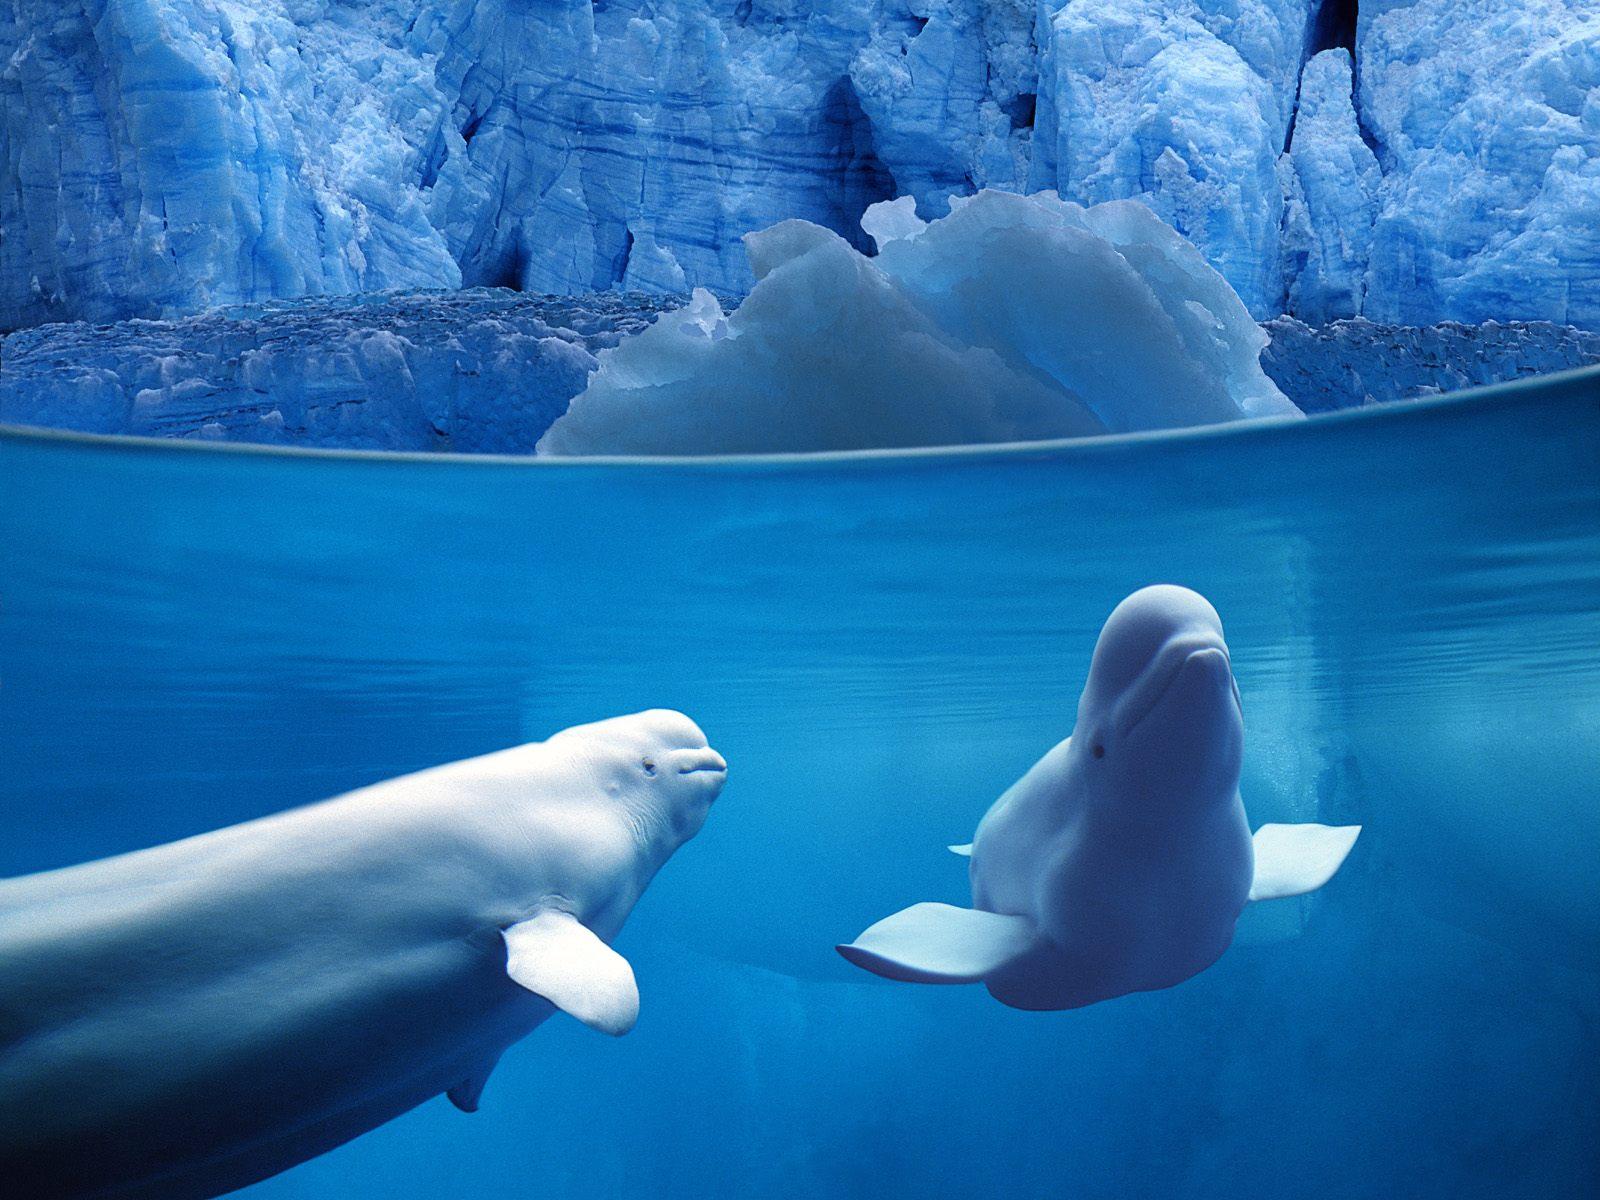 Beluga whale underwater free desktop background wallpaper image